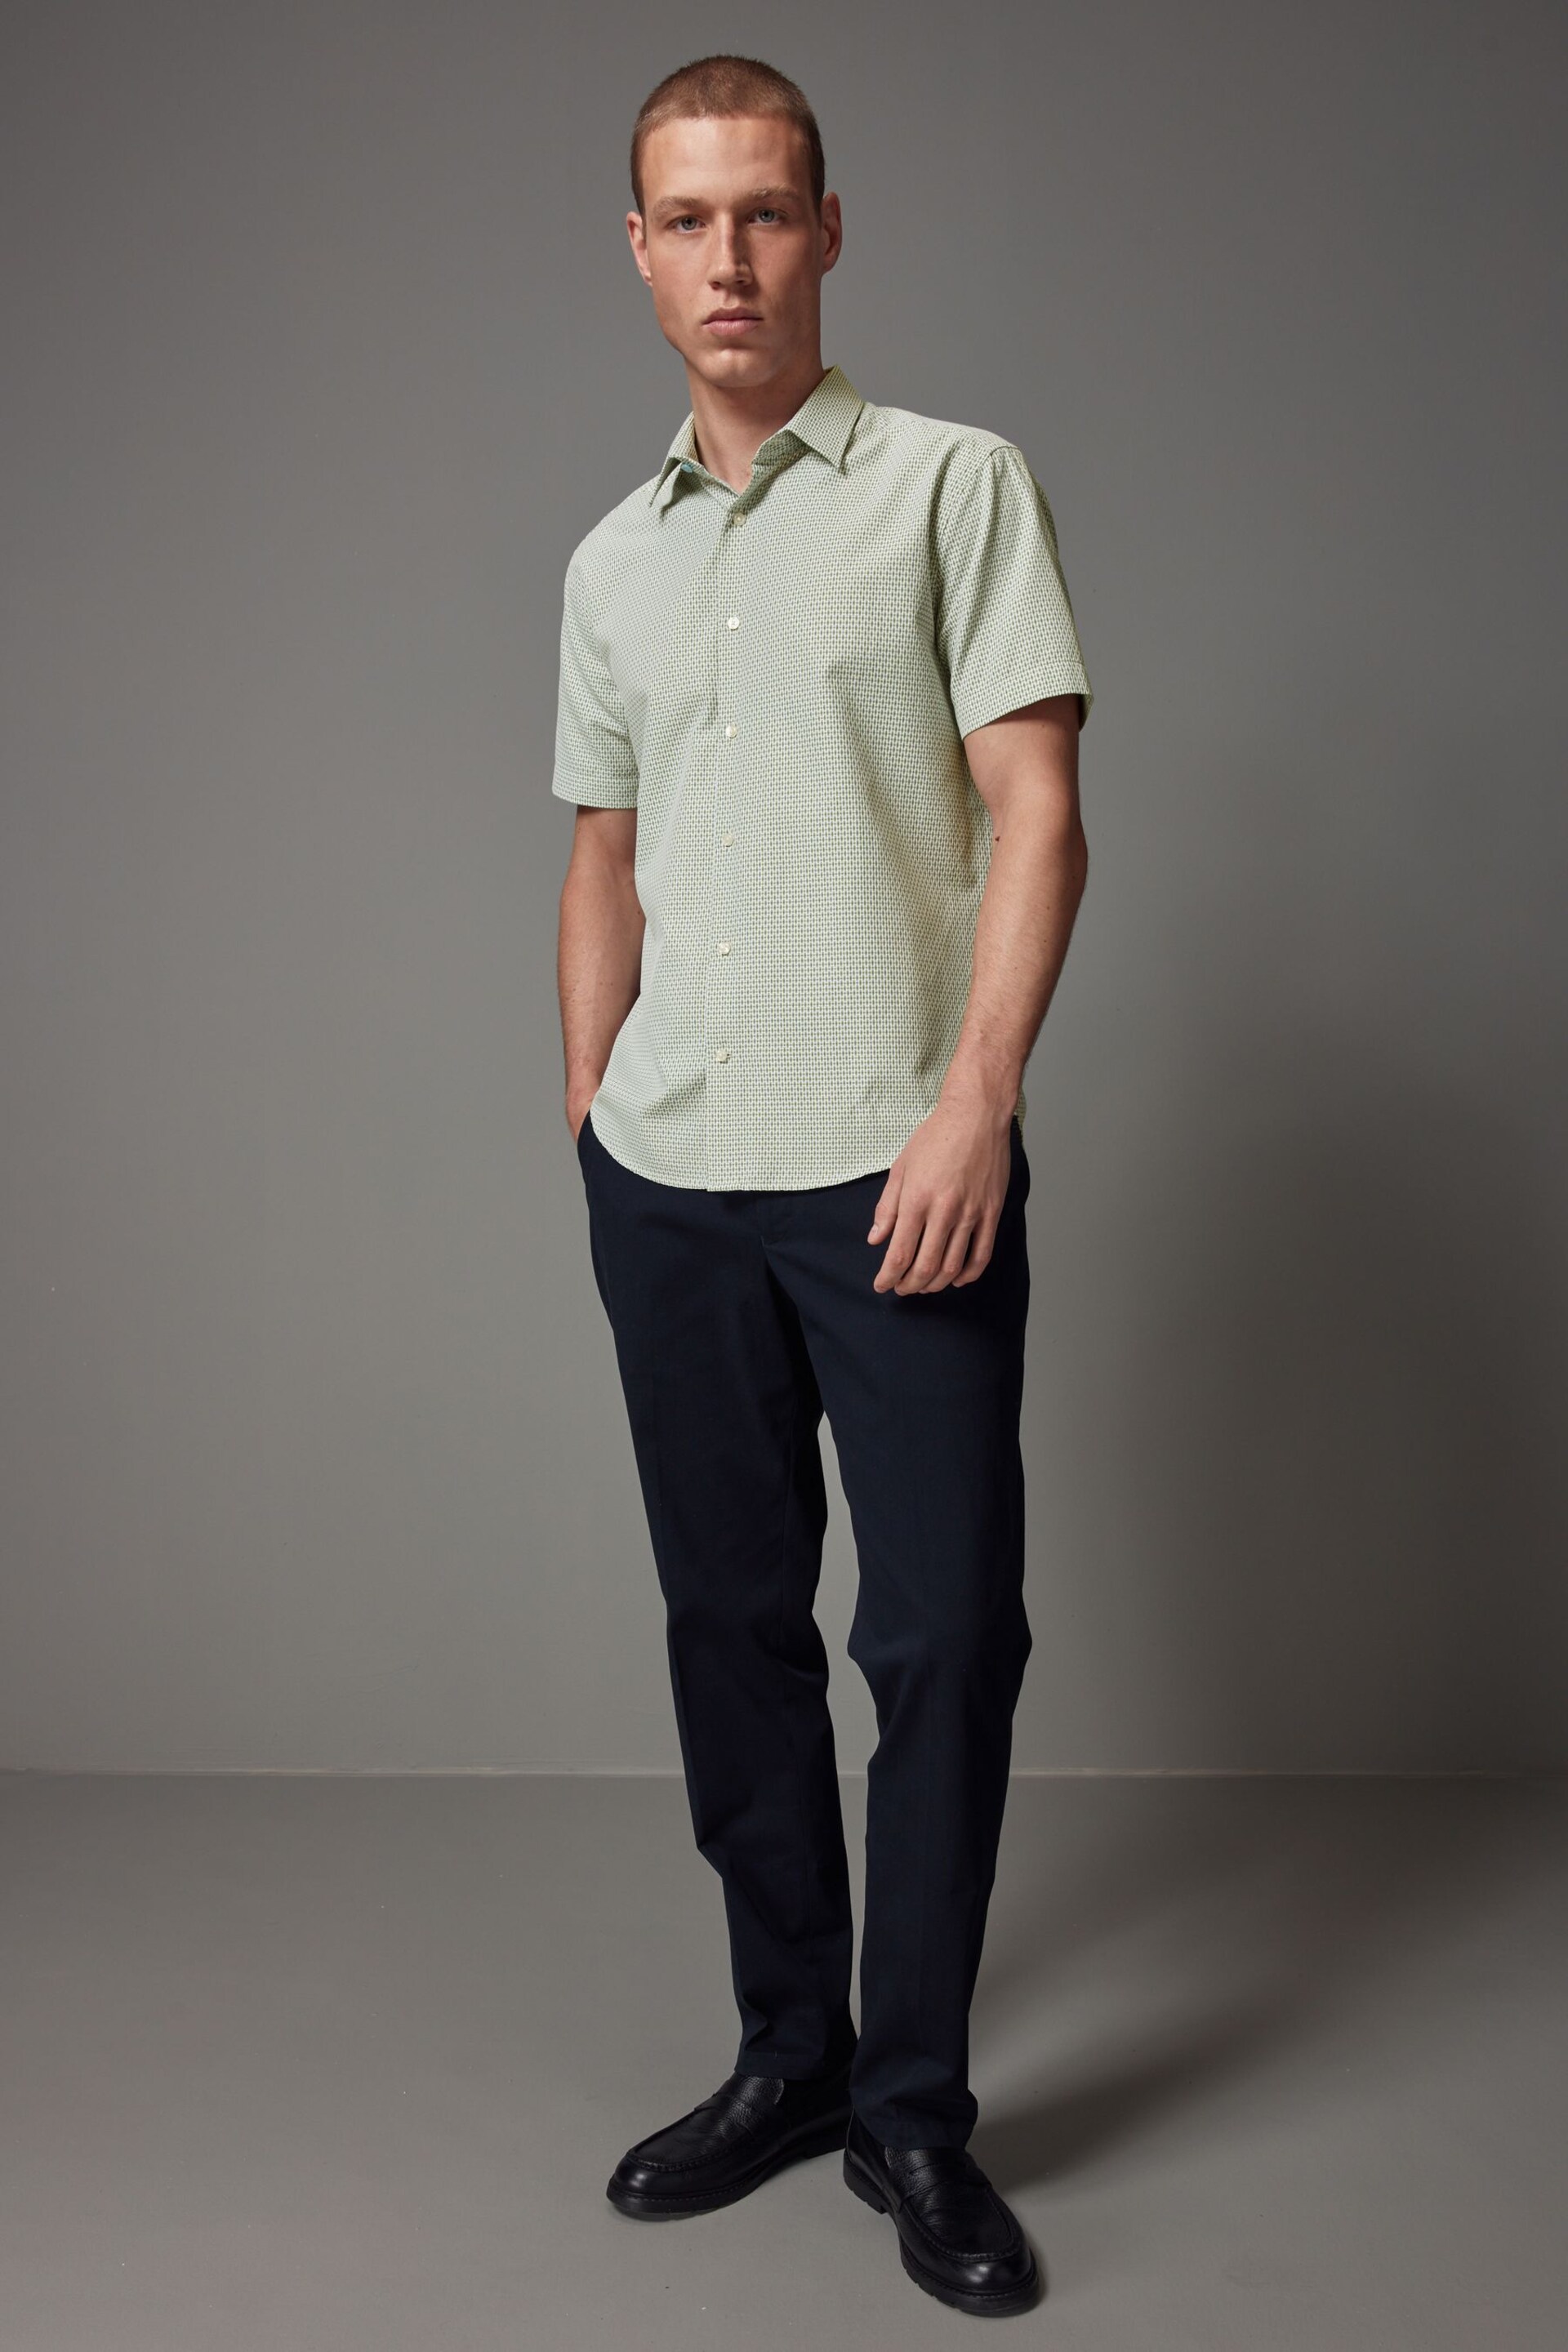 White/Green Textured Short Sleeve Shirt - Image 2 of 8